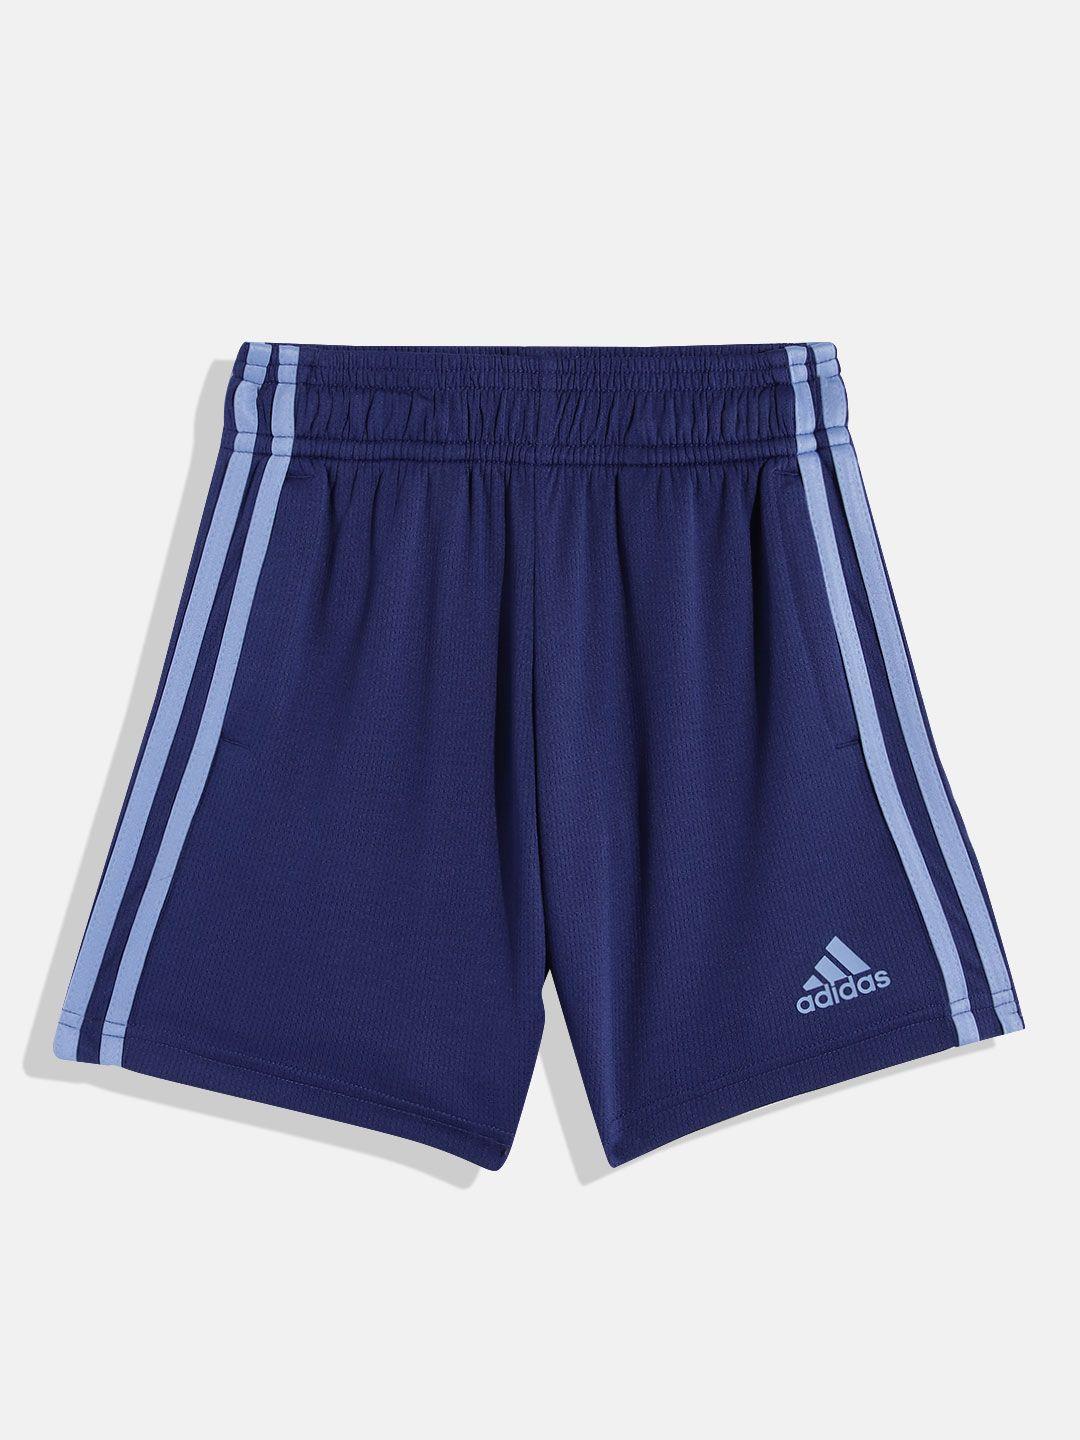 adidas boys navy blue shorts